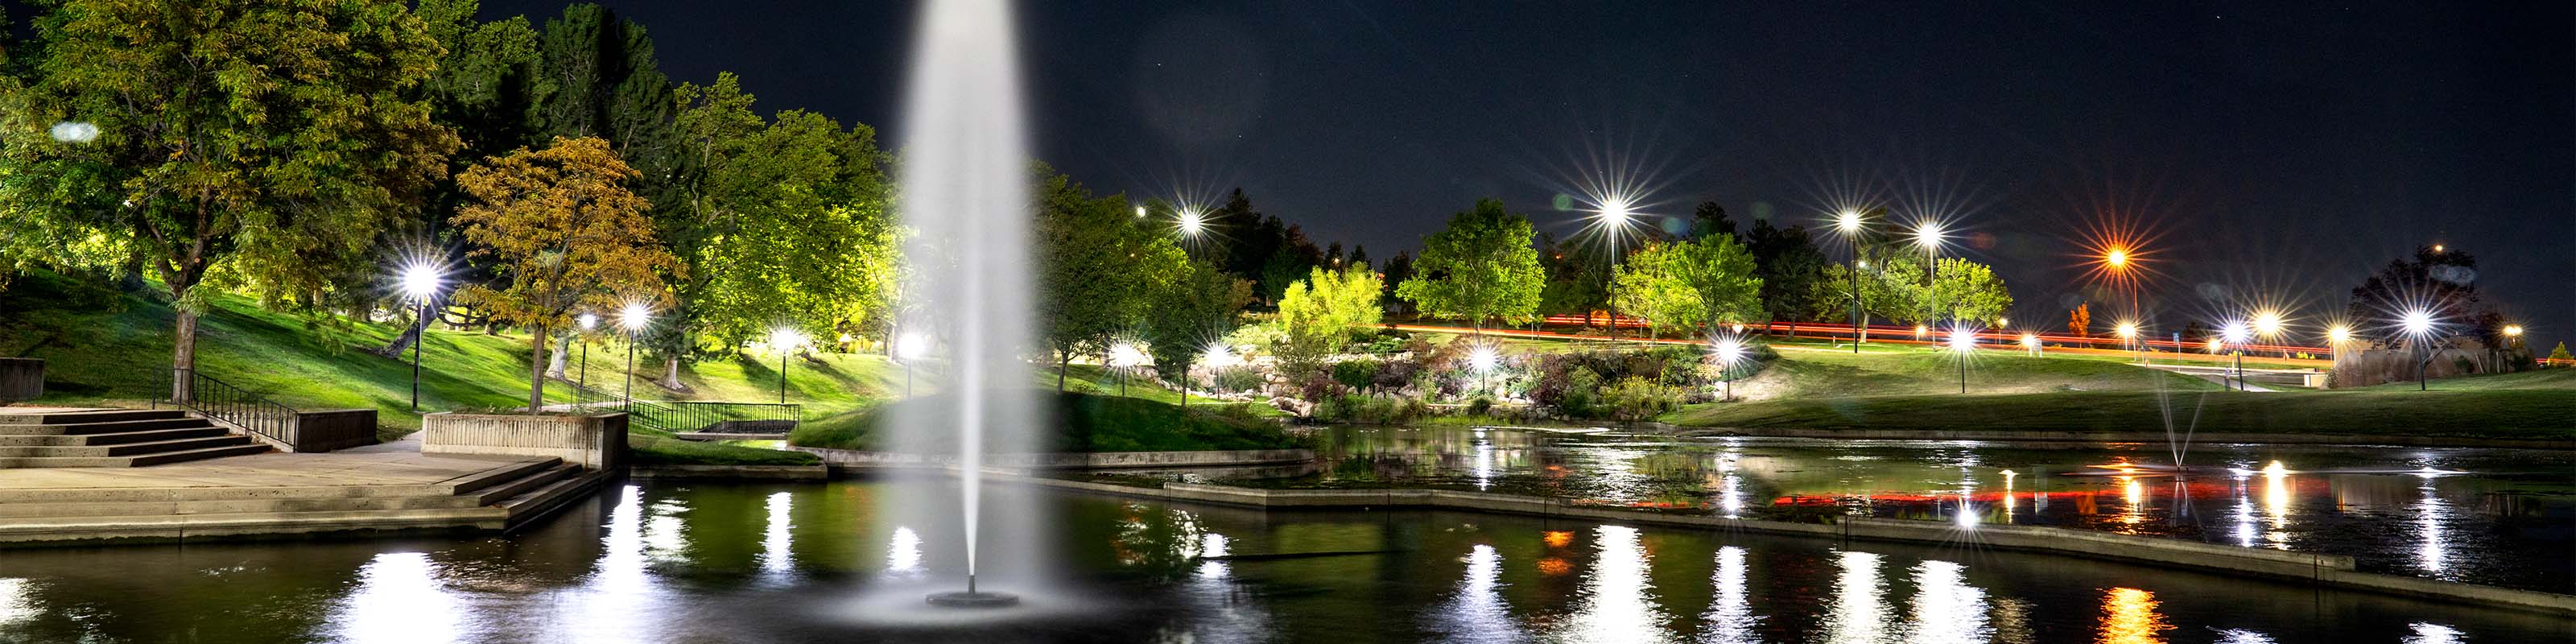 Weber State University pond with night lights